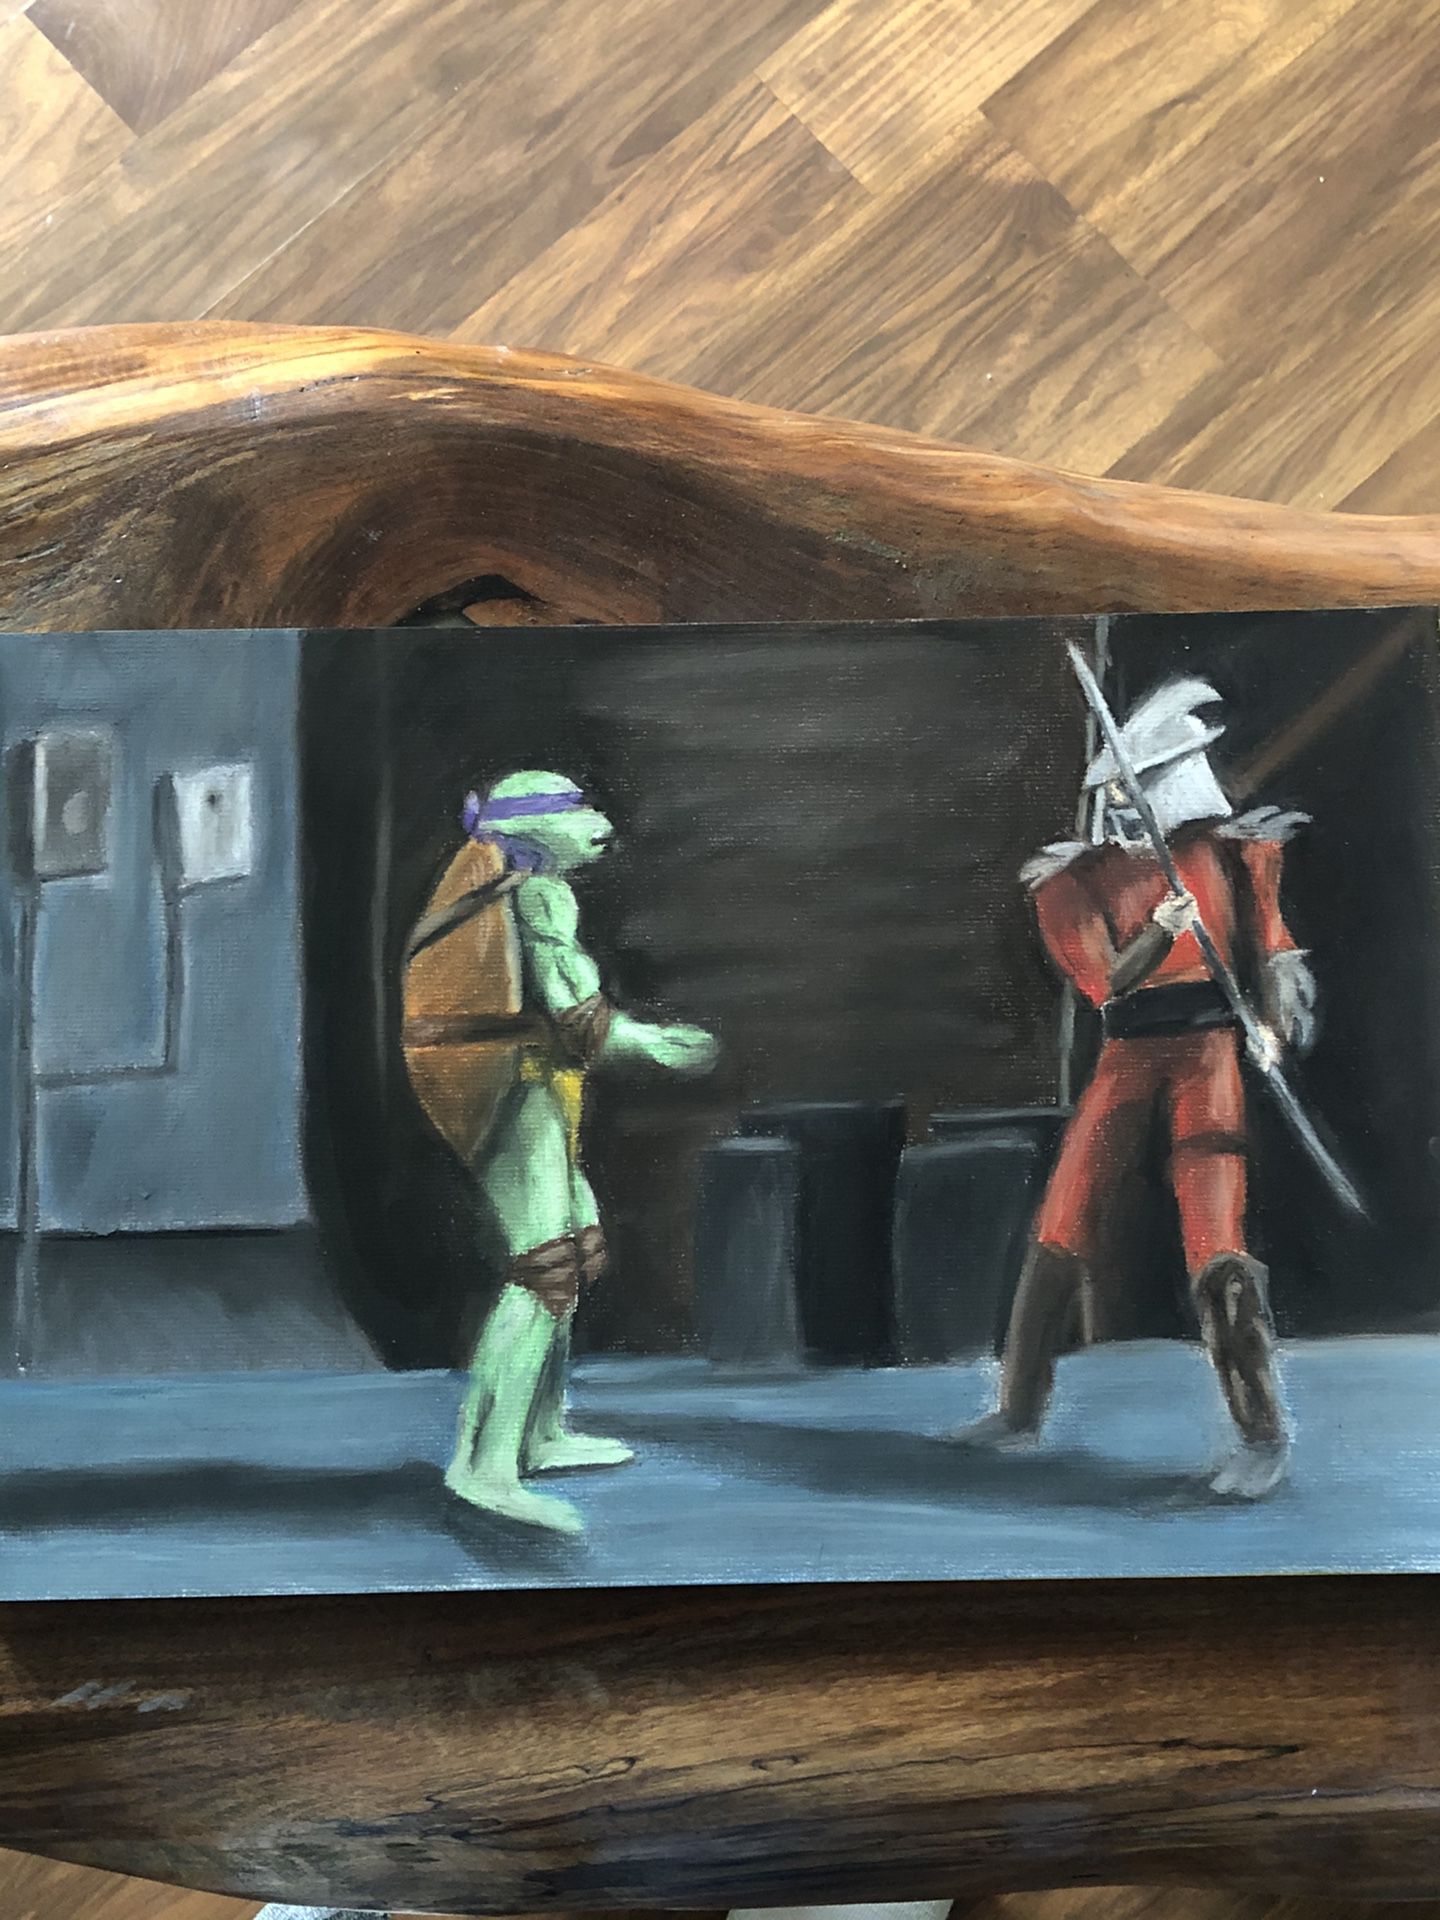 Ninja turtle fight scene with shredder